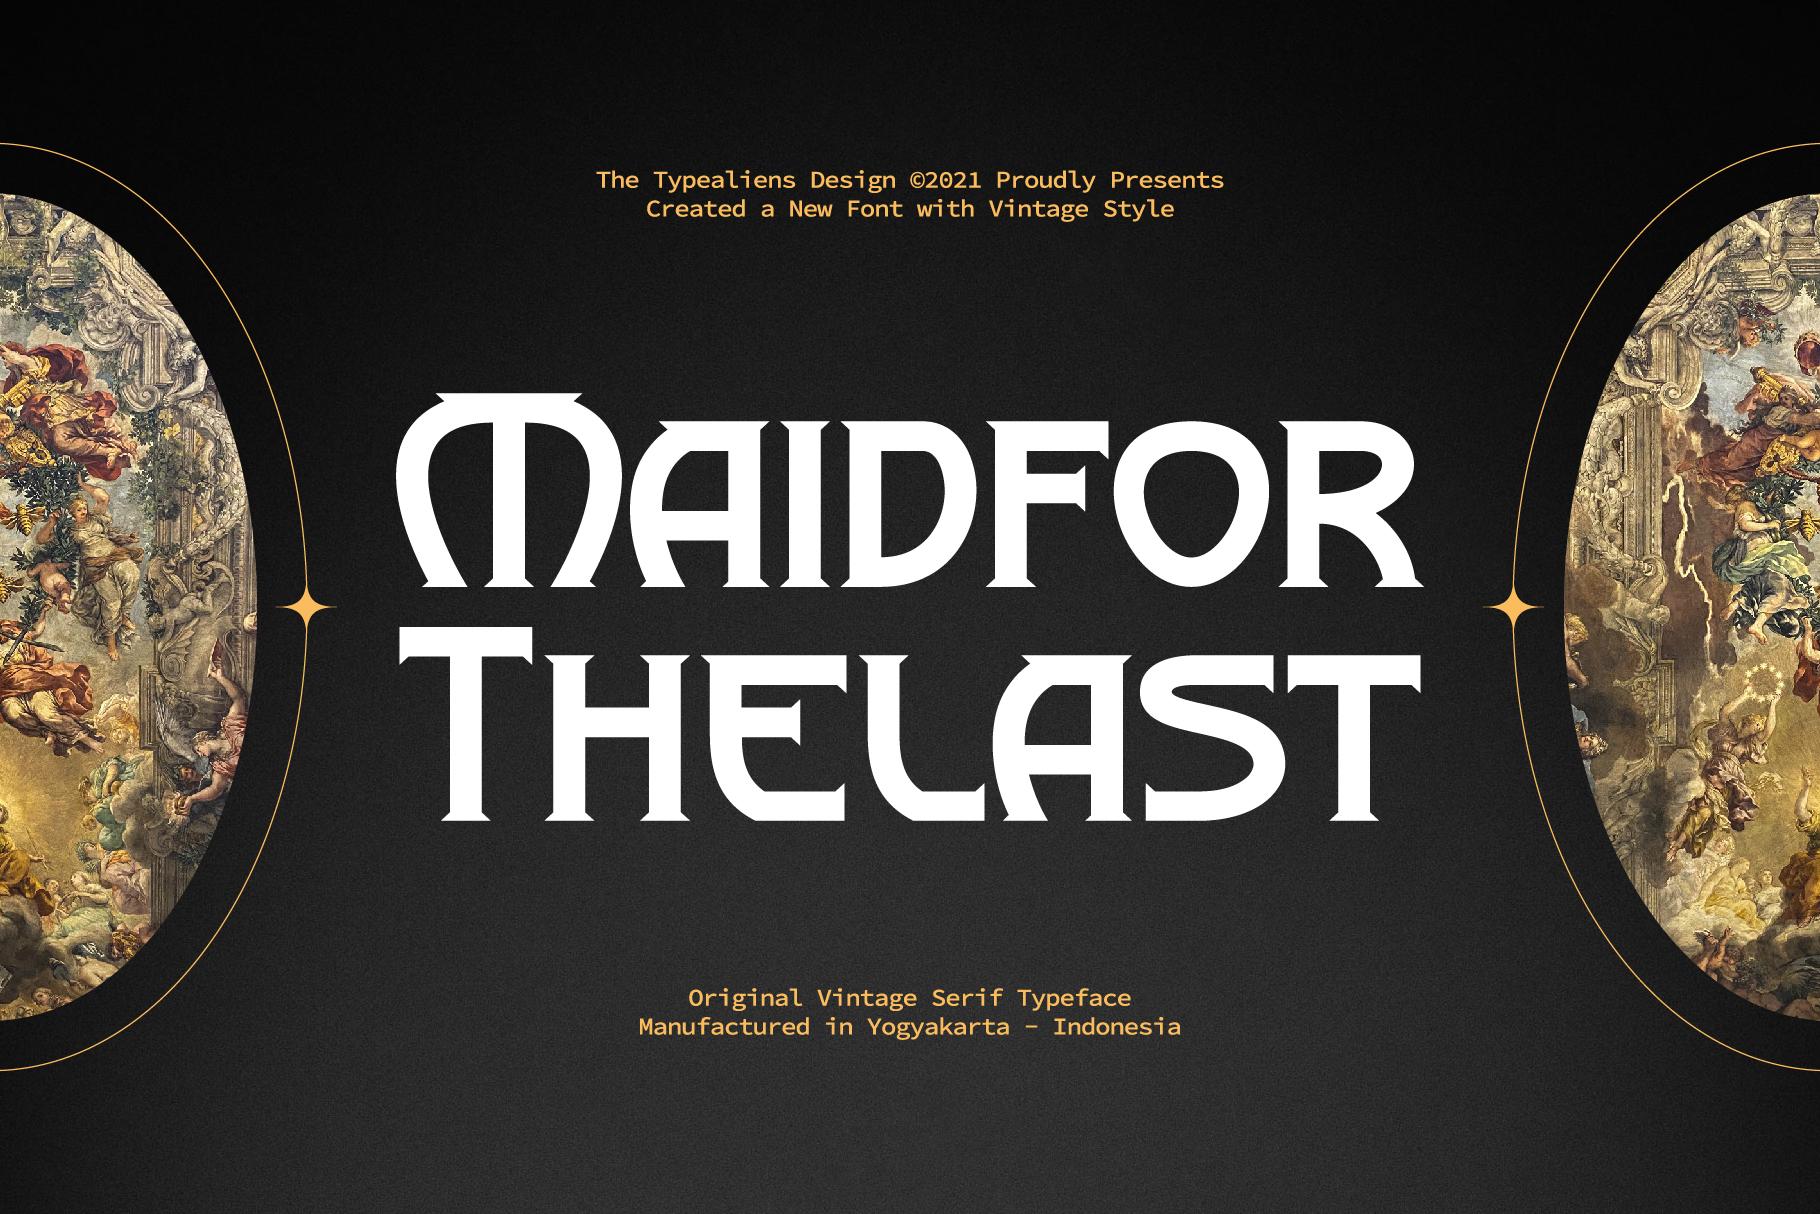 Maidfor Thelast Font